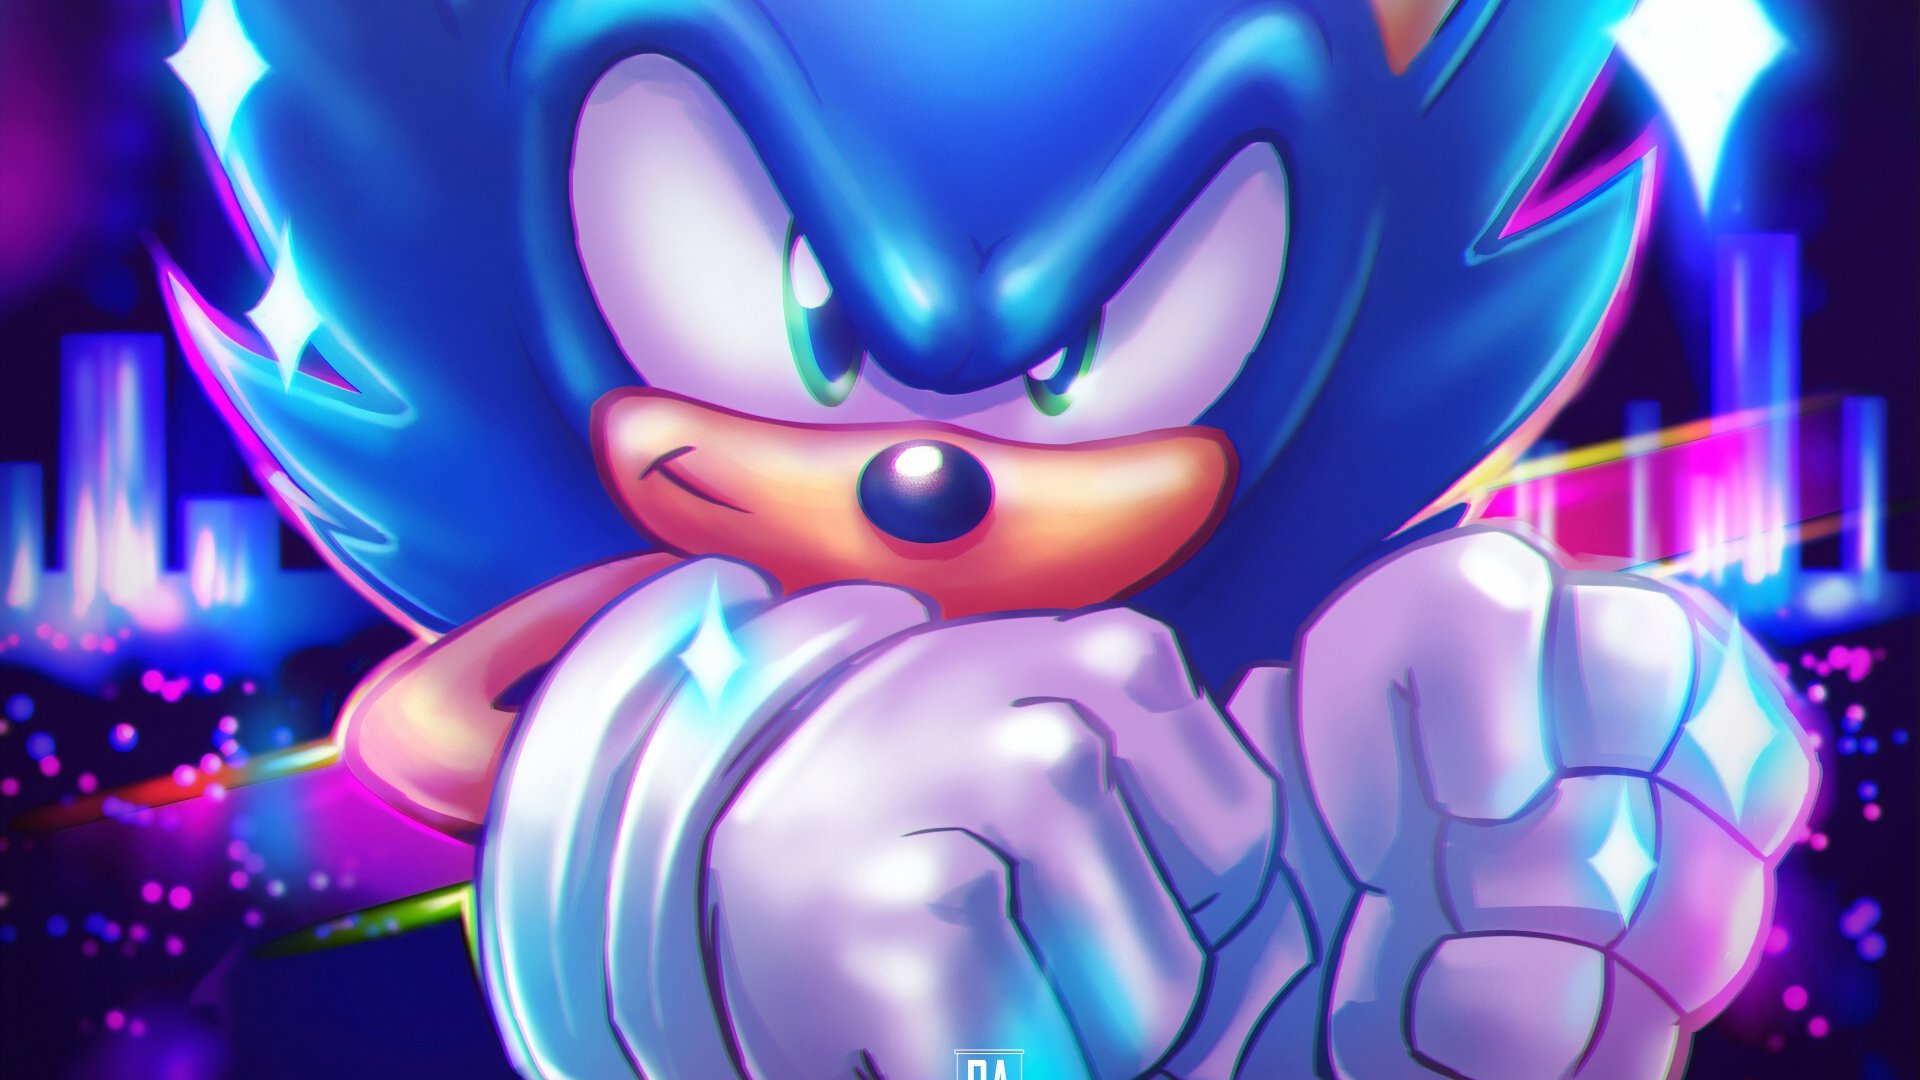 Sonic The Hedgehog 4k Ultra HD Wallpaper | Background Image | 3840x2160